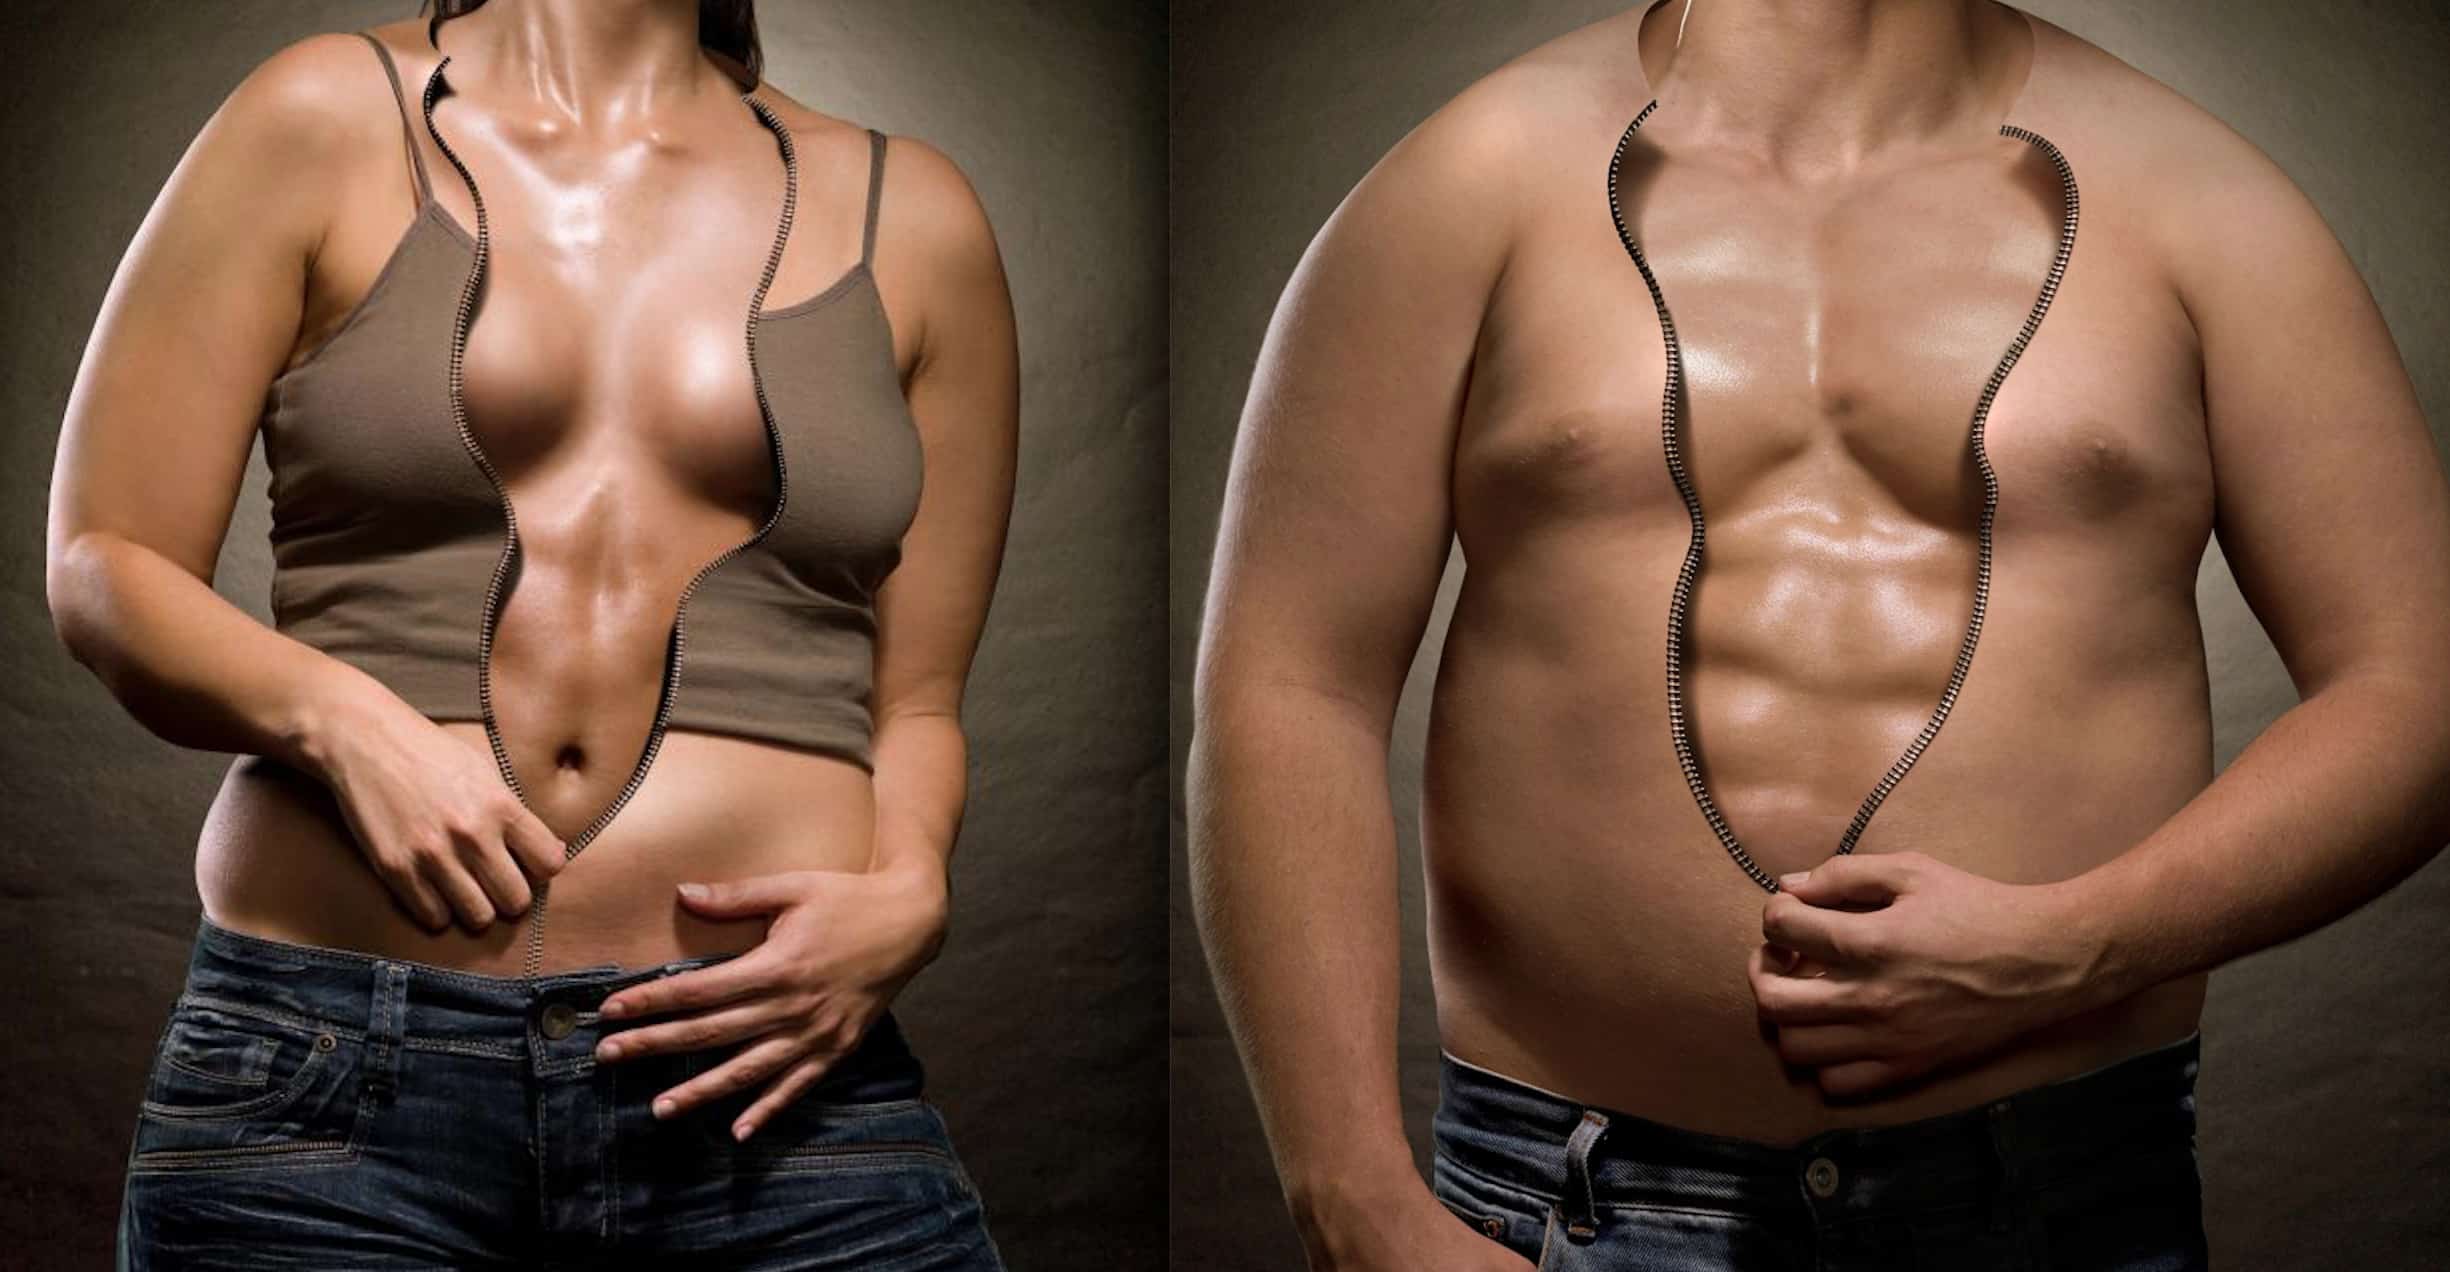 чем грудь влияет на мужчин фото 45